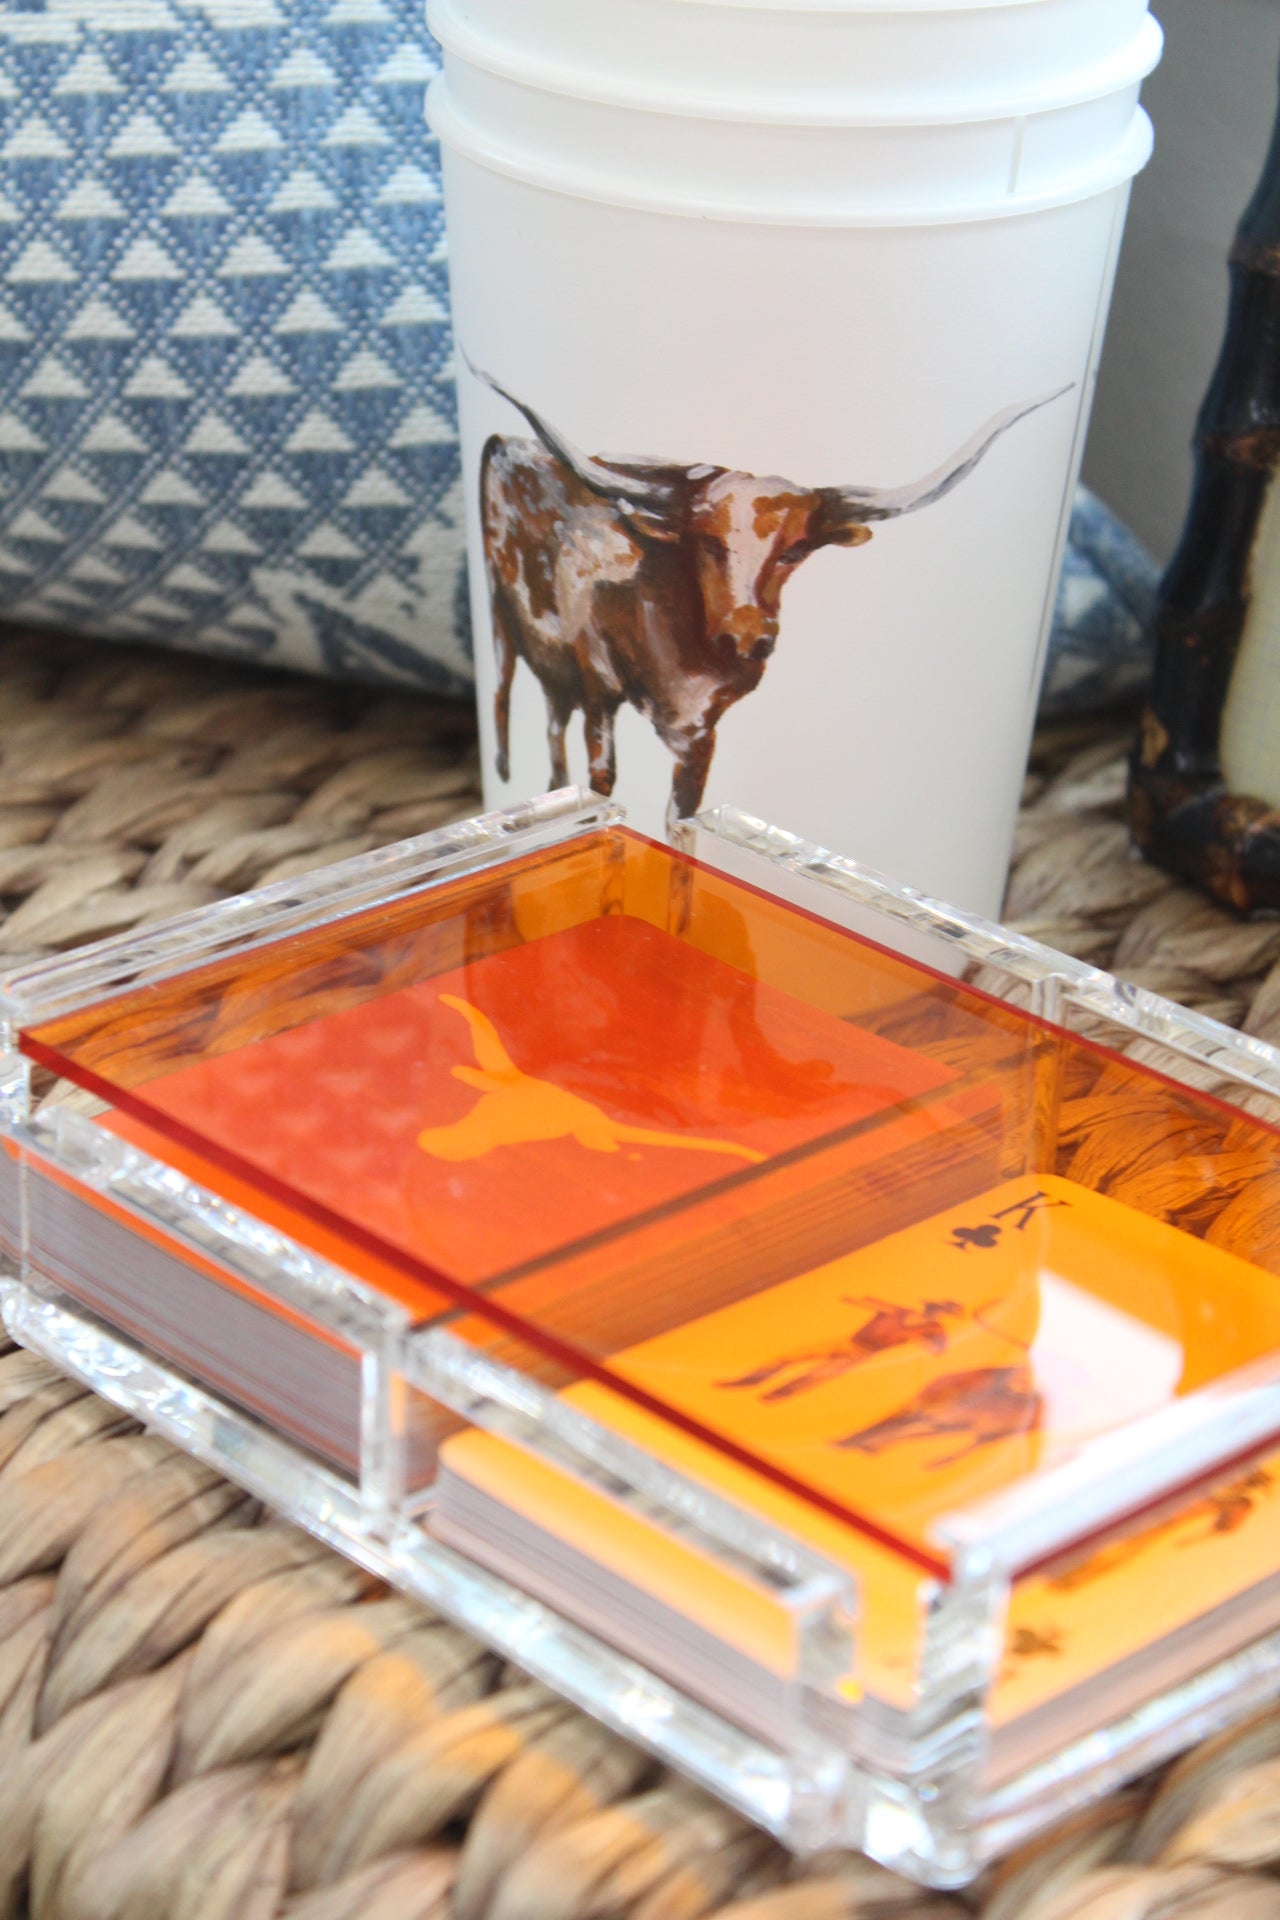 University of Texas Playing Card Display Bundle - Orange Translucent Acrylic Double Display